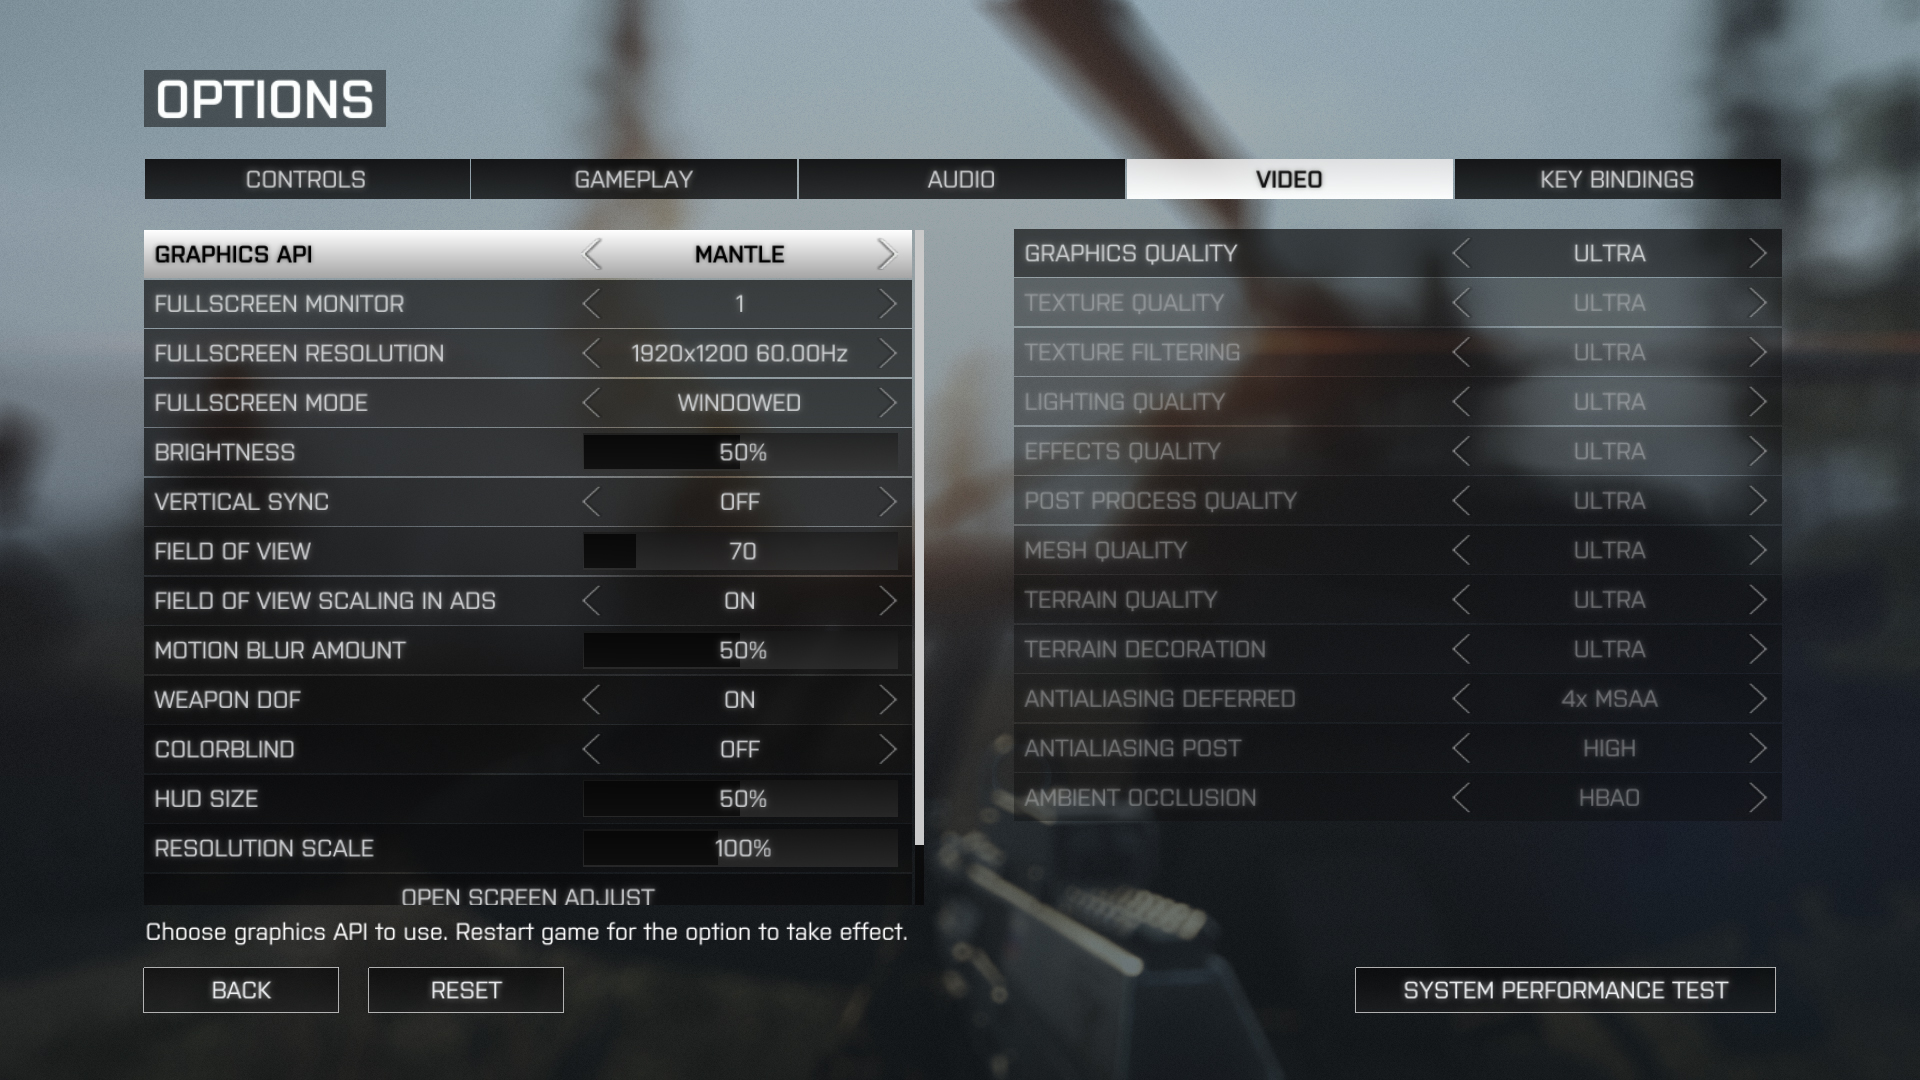 Battlefield 4 Battlelog Gets Major Update with Support for China